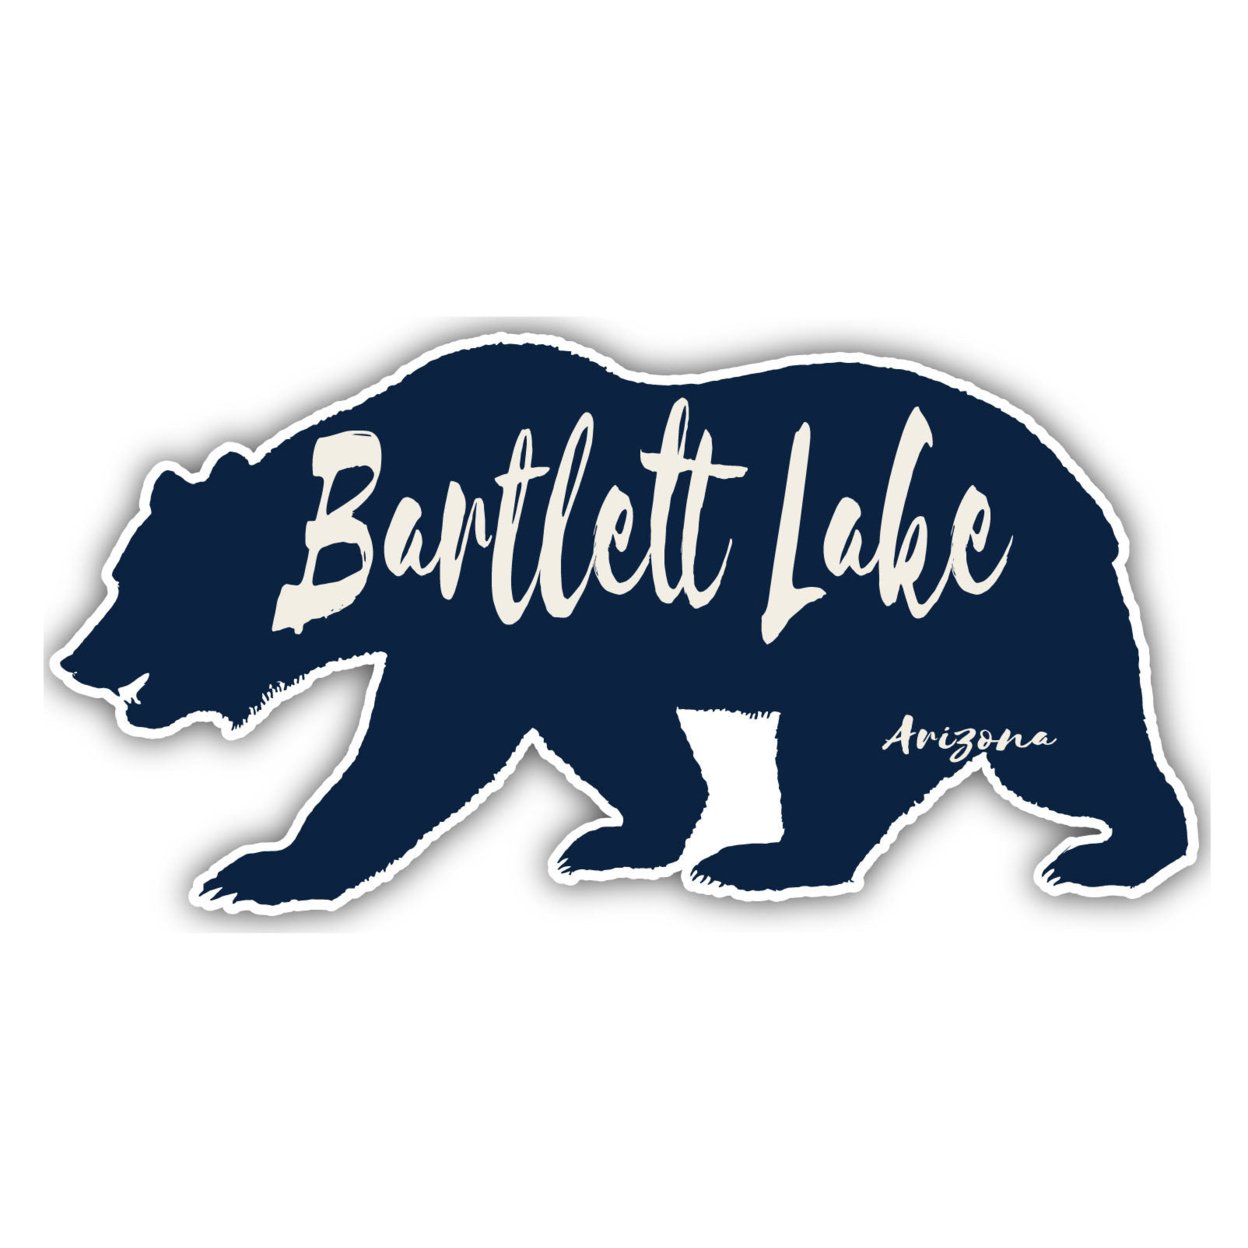 Bartlett Lake Arizona Souvenir Decorative Stickers (Choose Theme And Size) - 4-Pack, 12-Inch, Bear